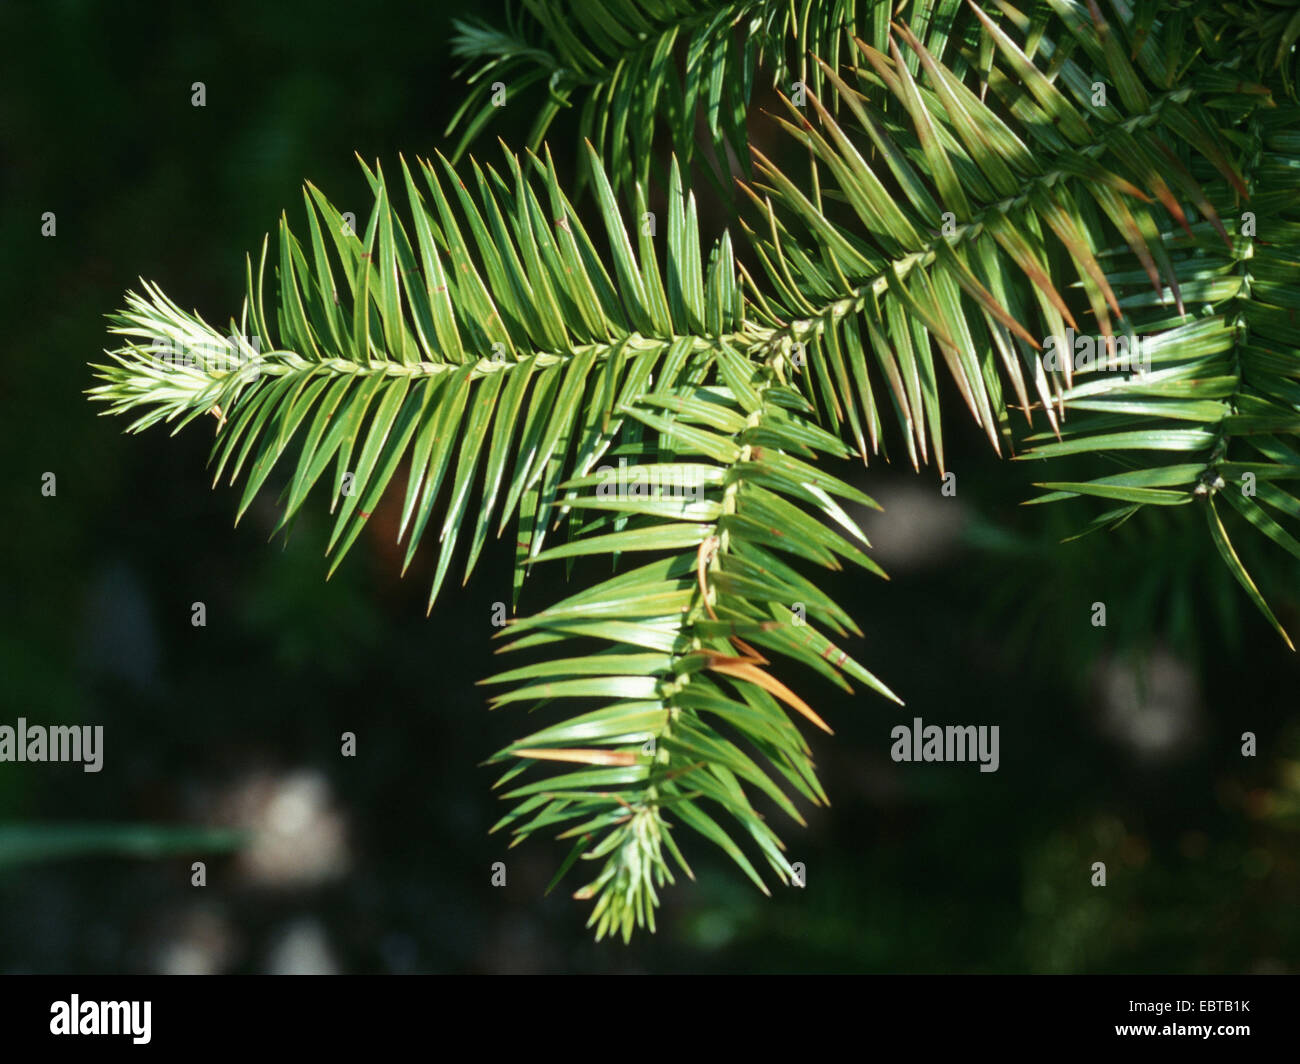 China fir, Chinese fir (Cunninghamia lanceolata), branch Stock Photo